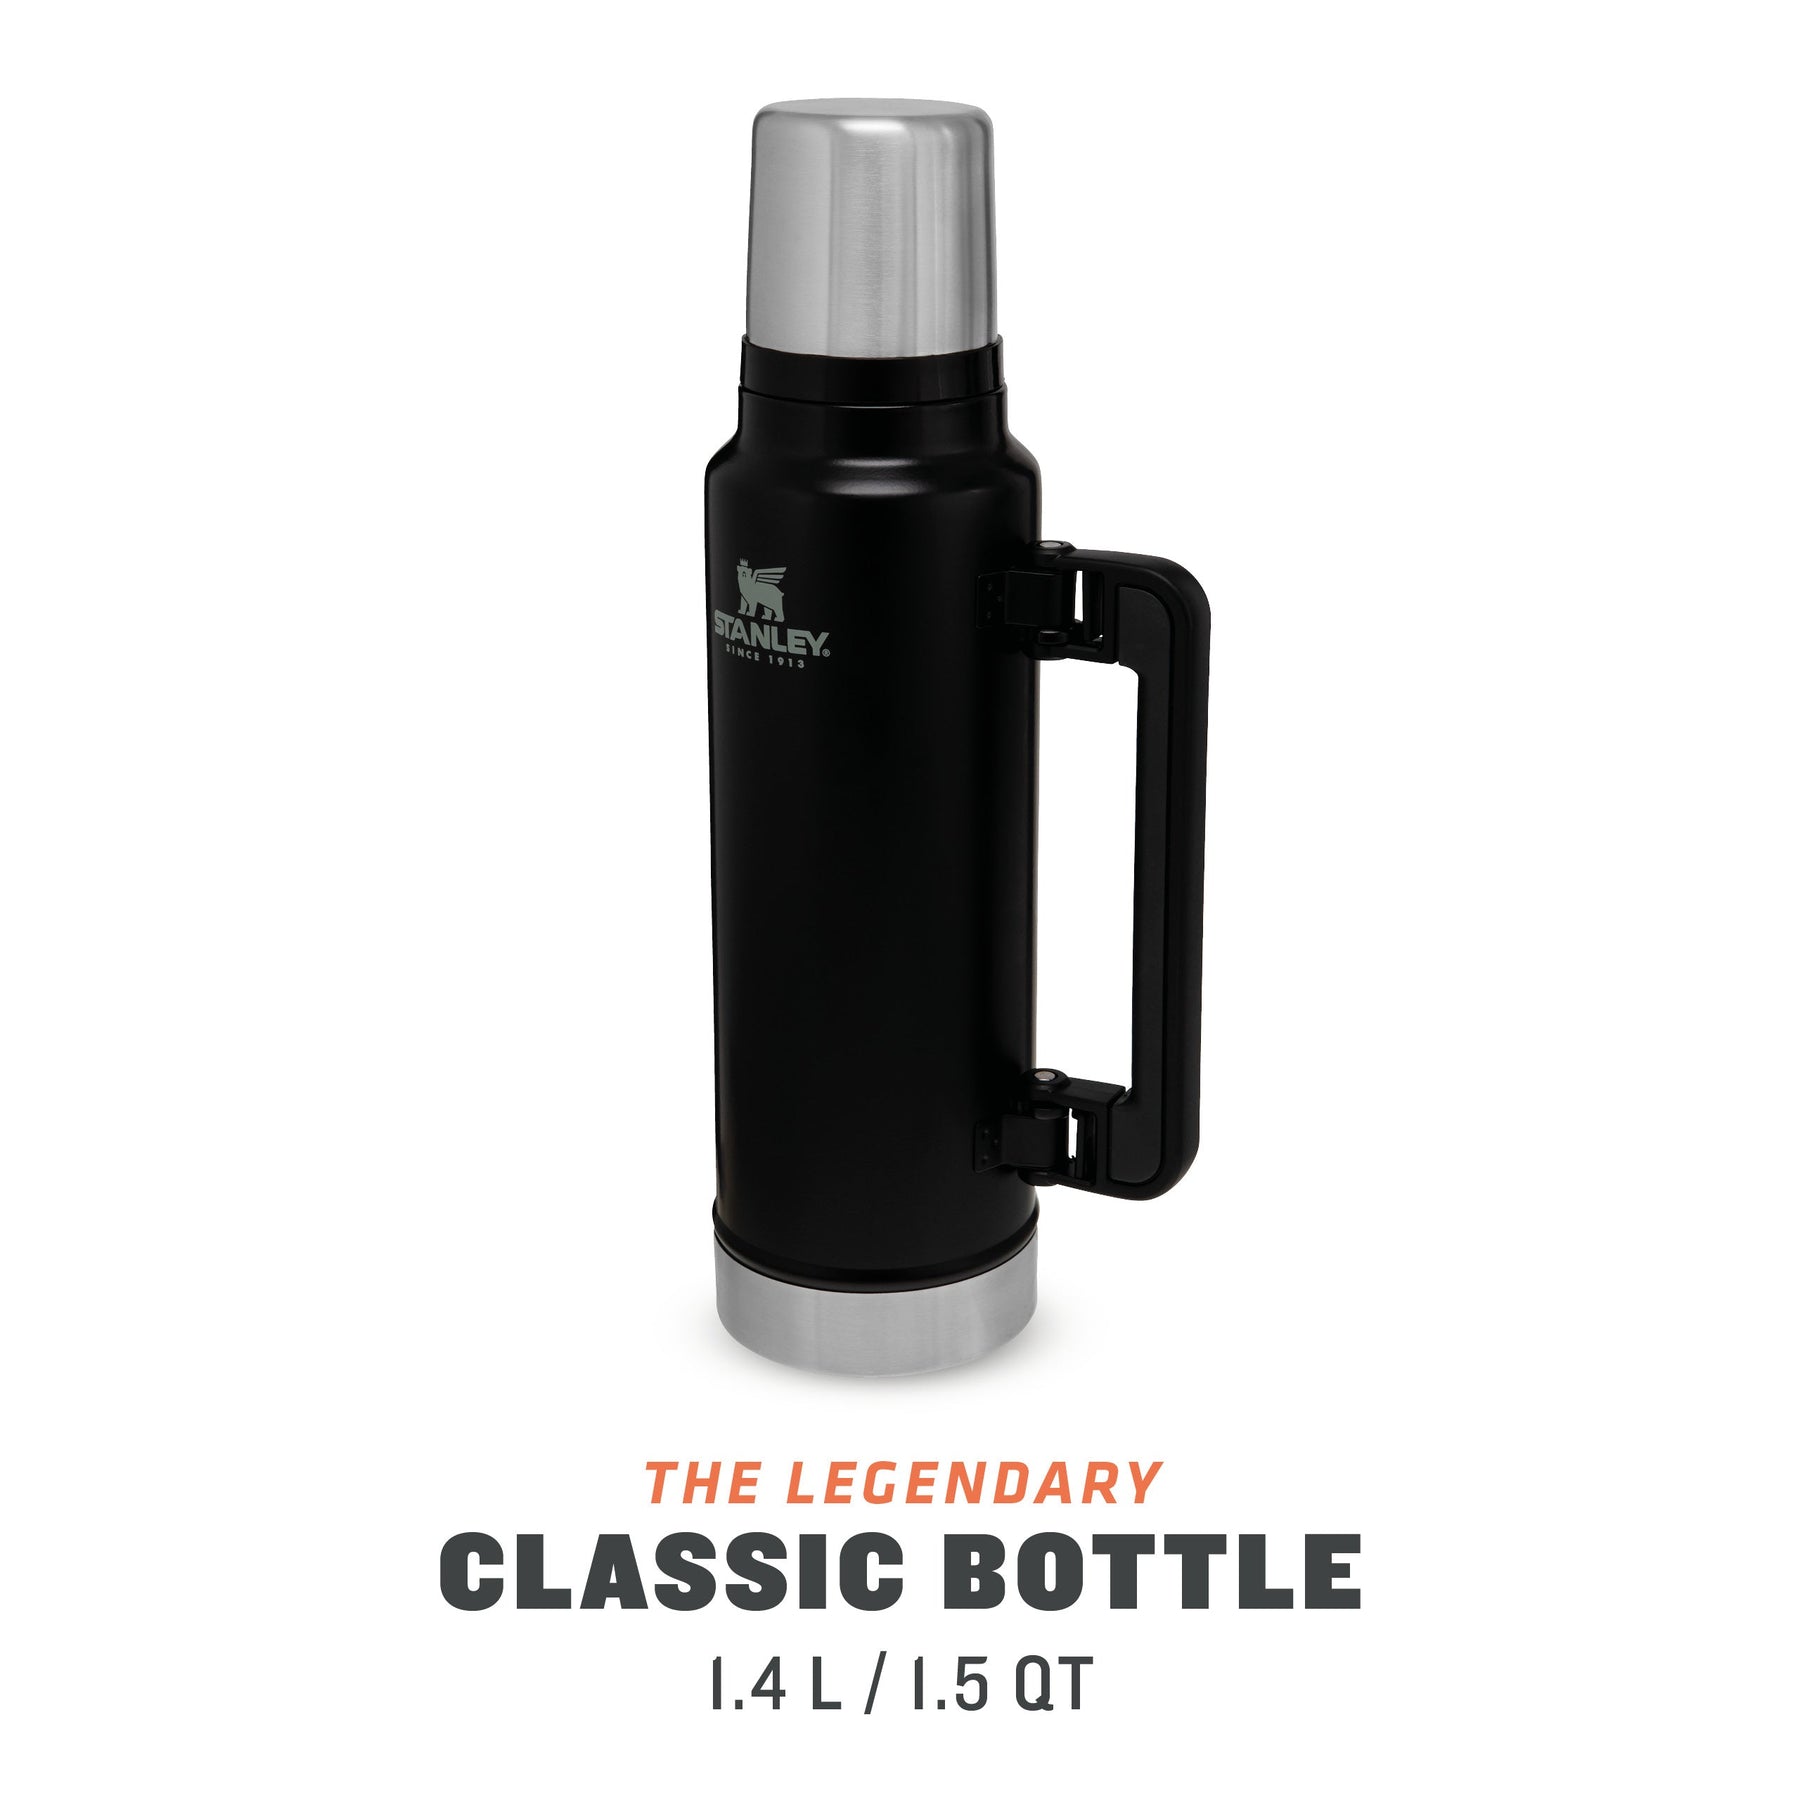 Stanley Classic Legendary Bottle | 1.5 qt, Blaze Orange